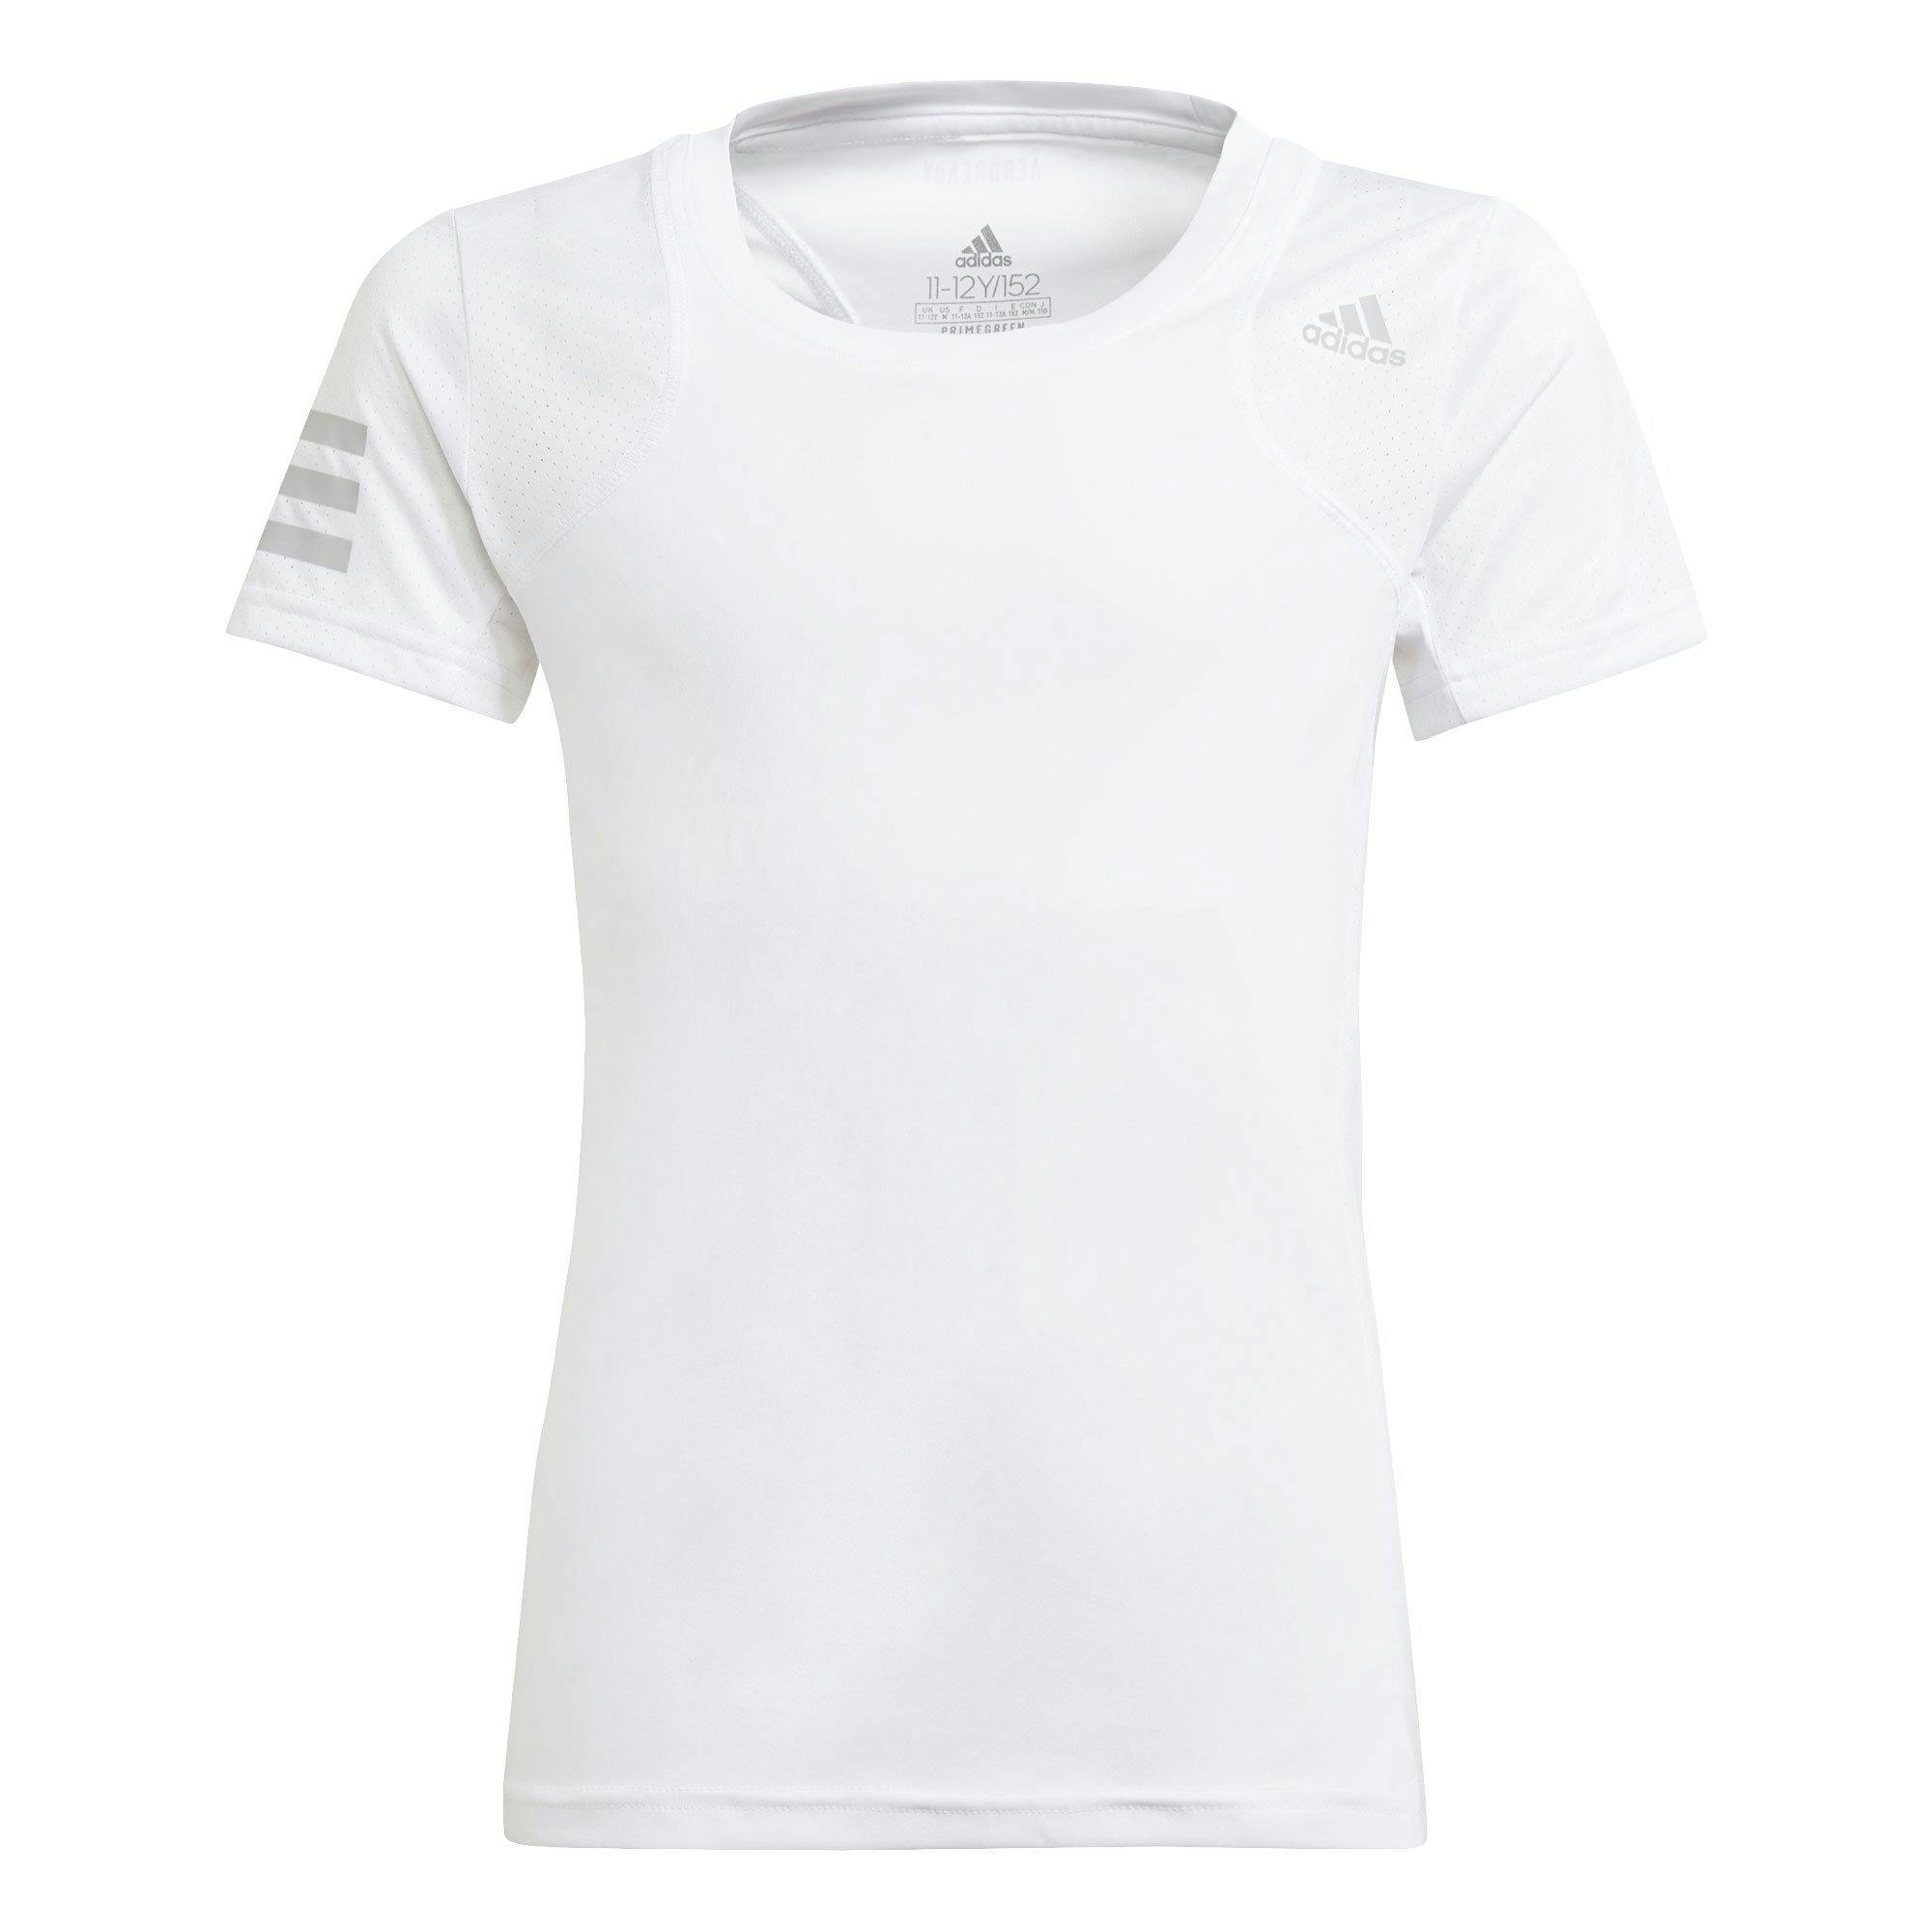 Adidas Girl's Club White-Grey Tennis Shirt